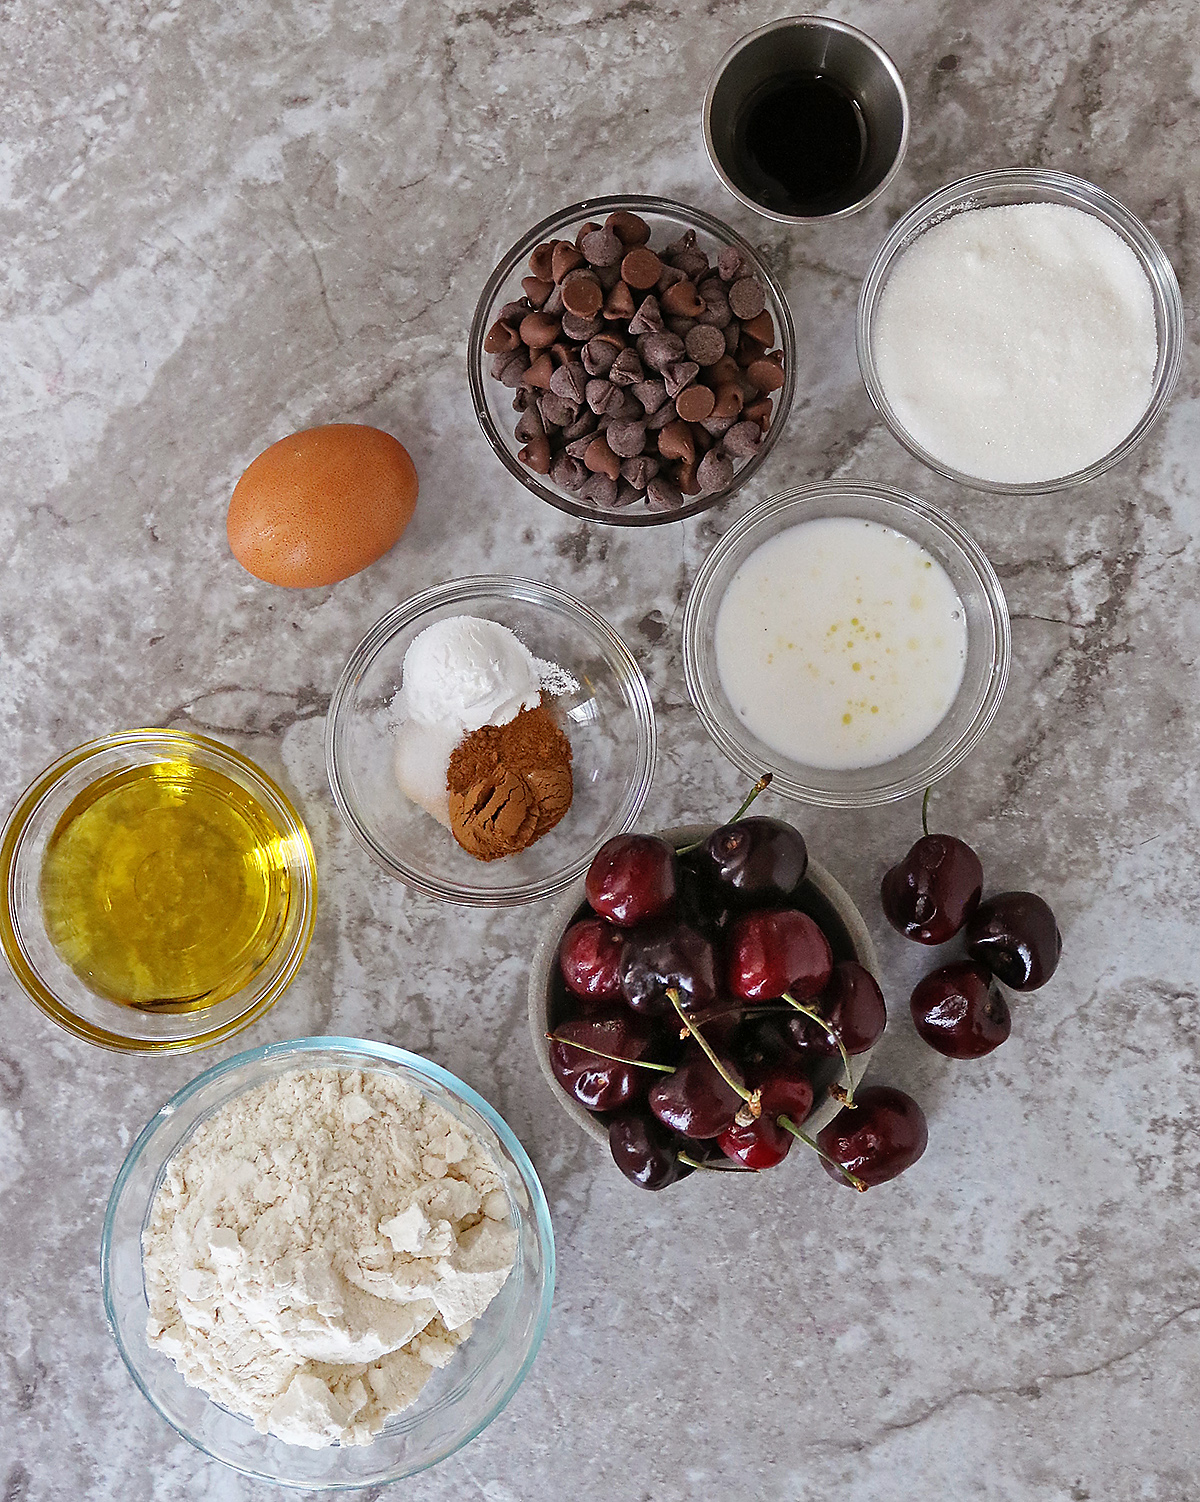 Ingredients to make choc cherry MTs